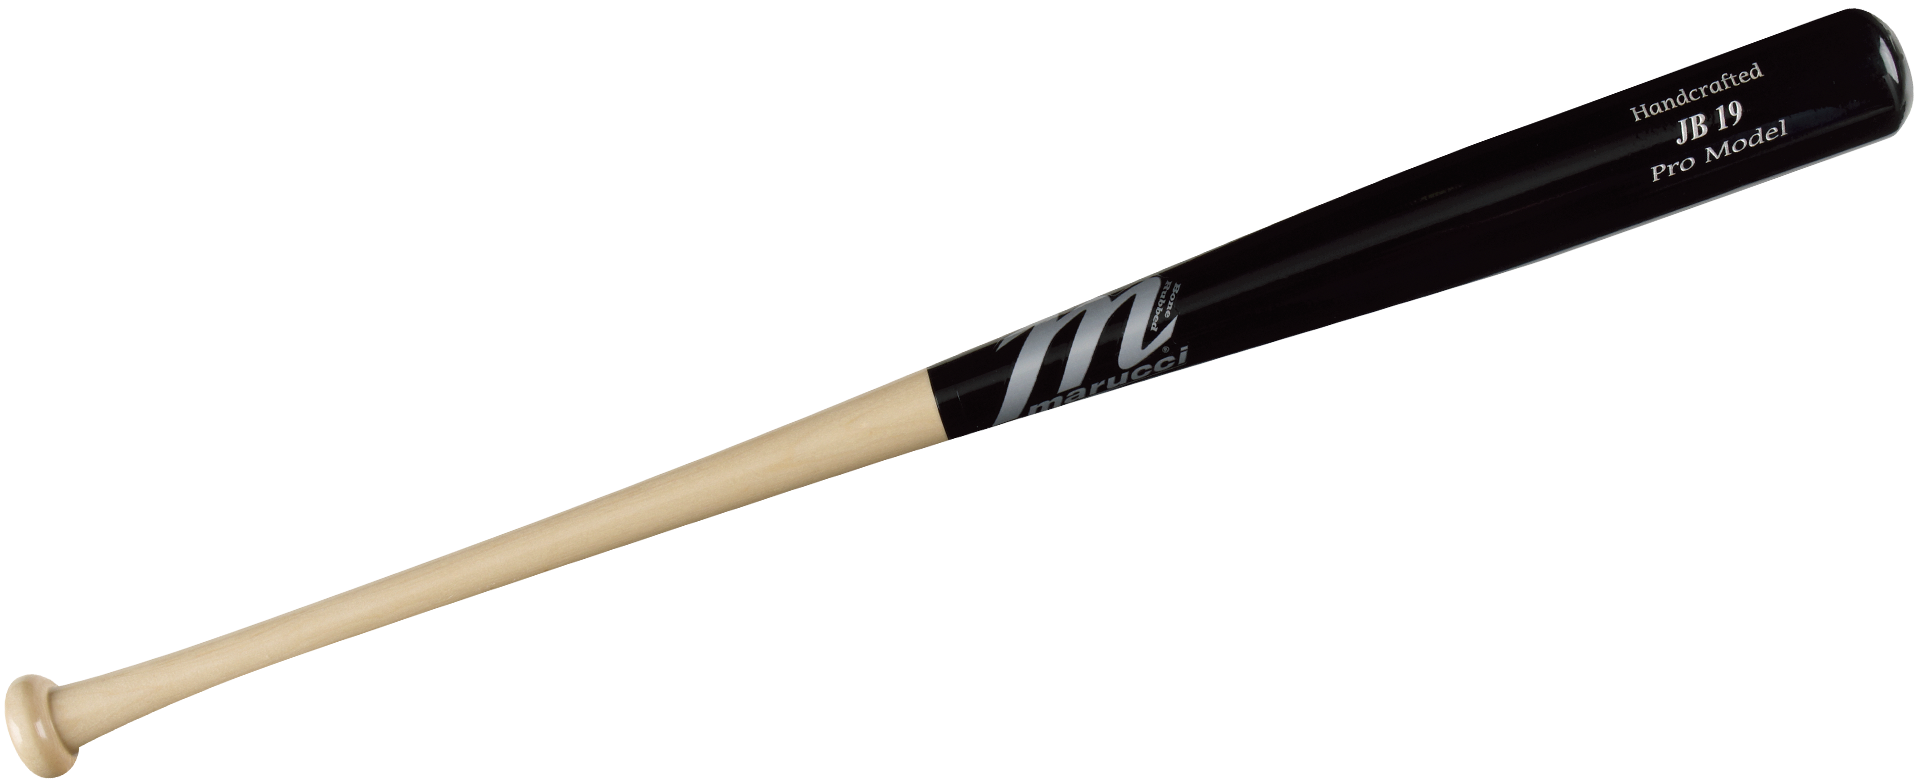 PNG Softball Bat - 86803